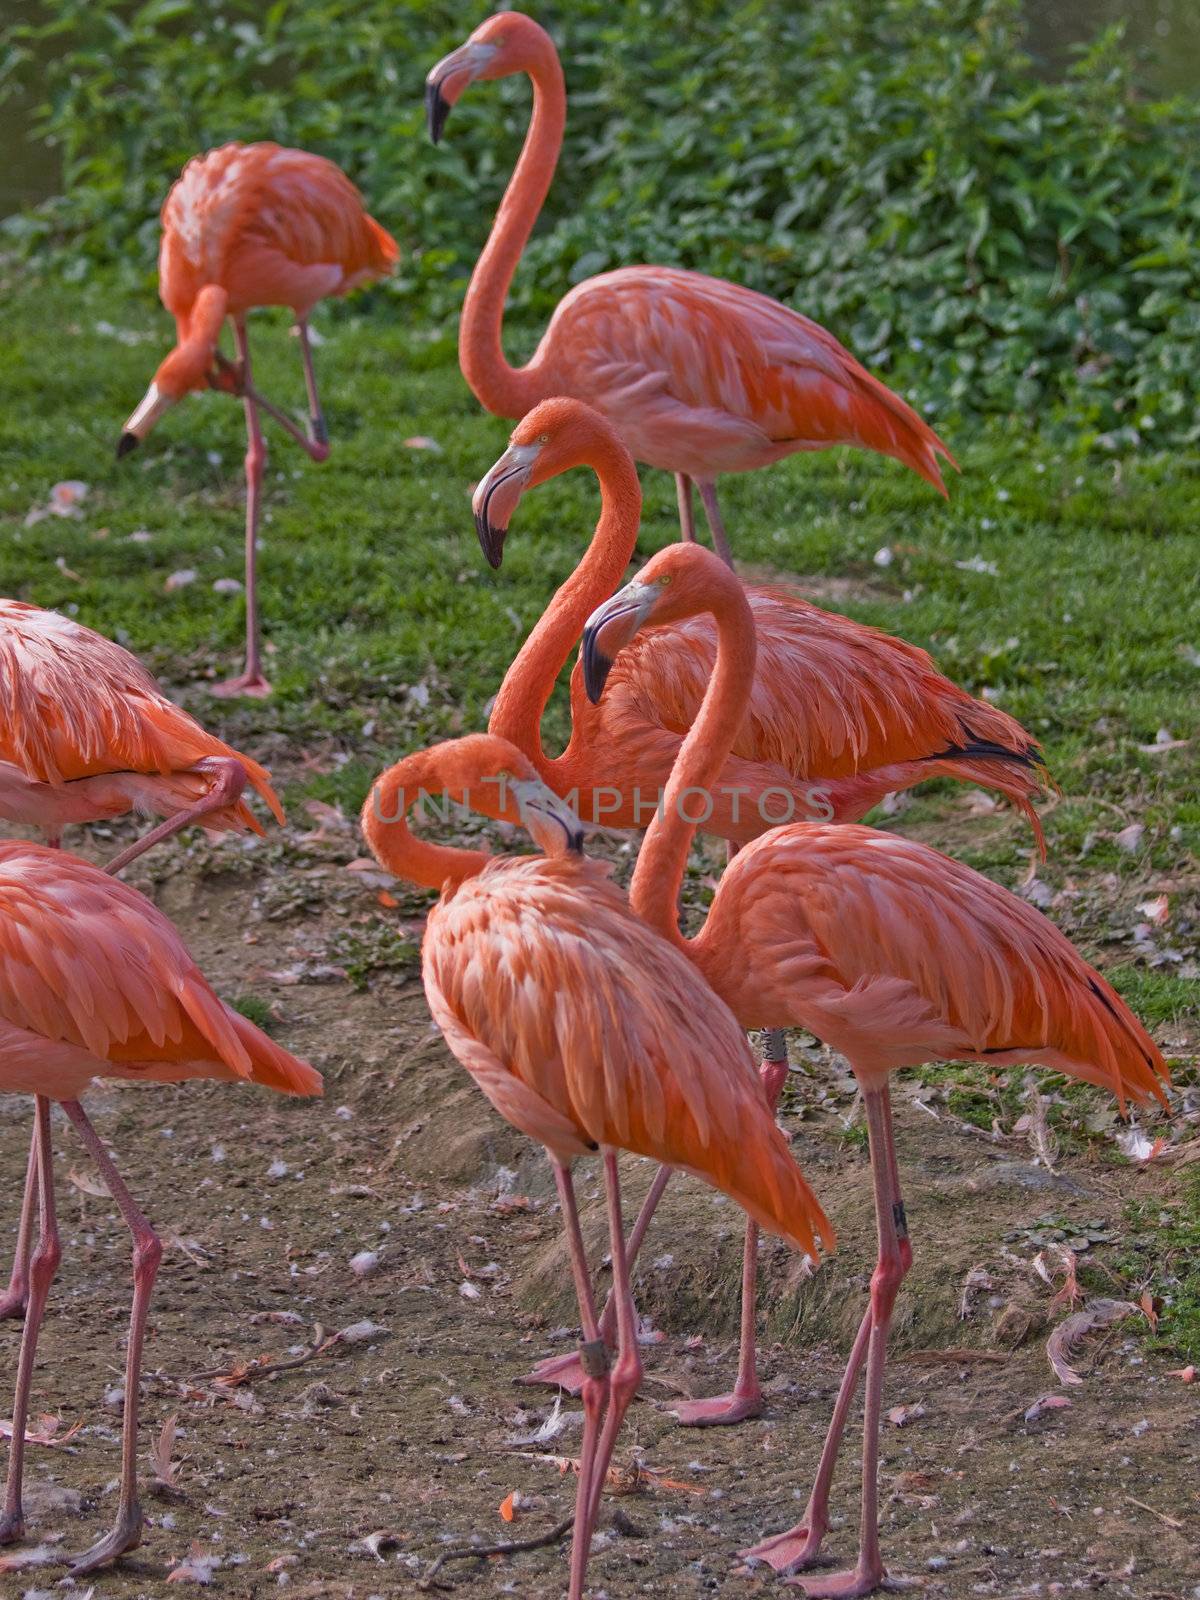 Caribbean Flamingo Flock 1 by pjhpix